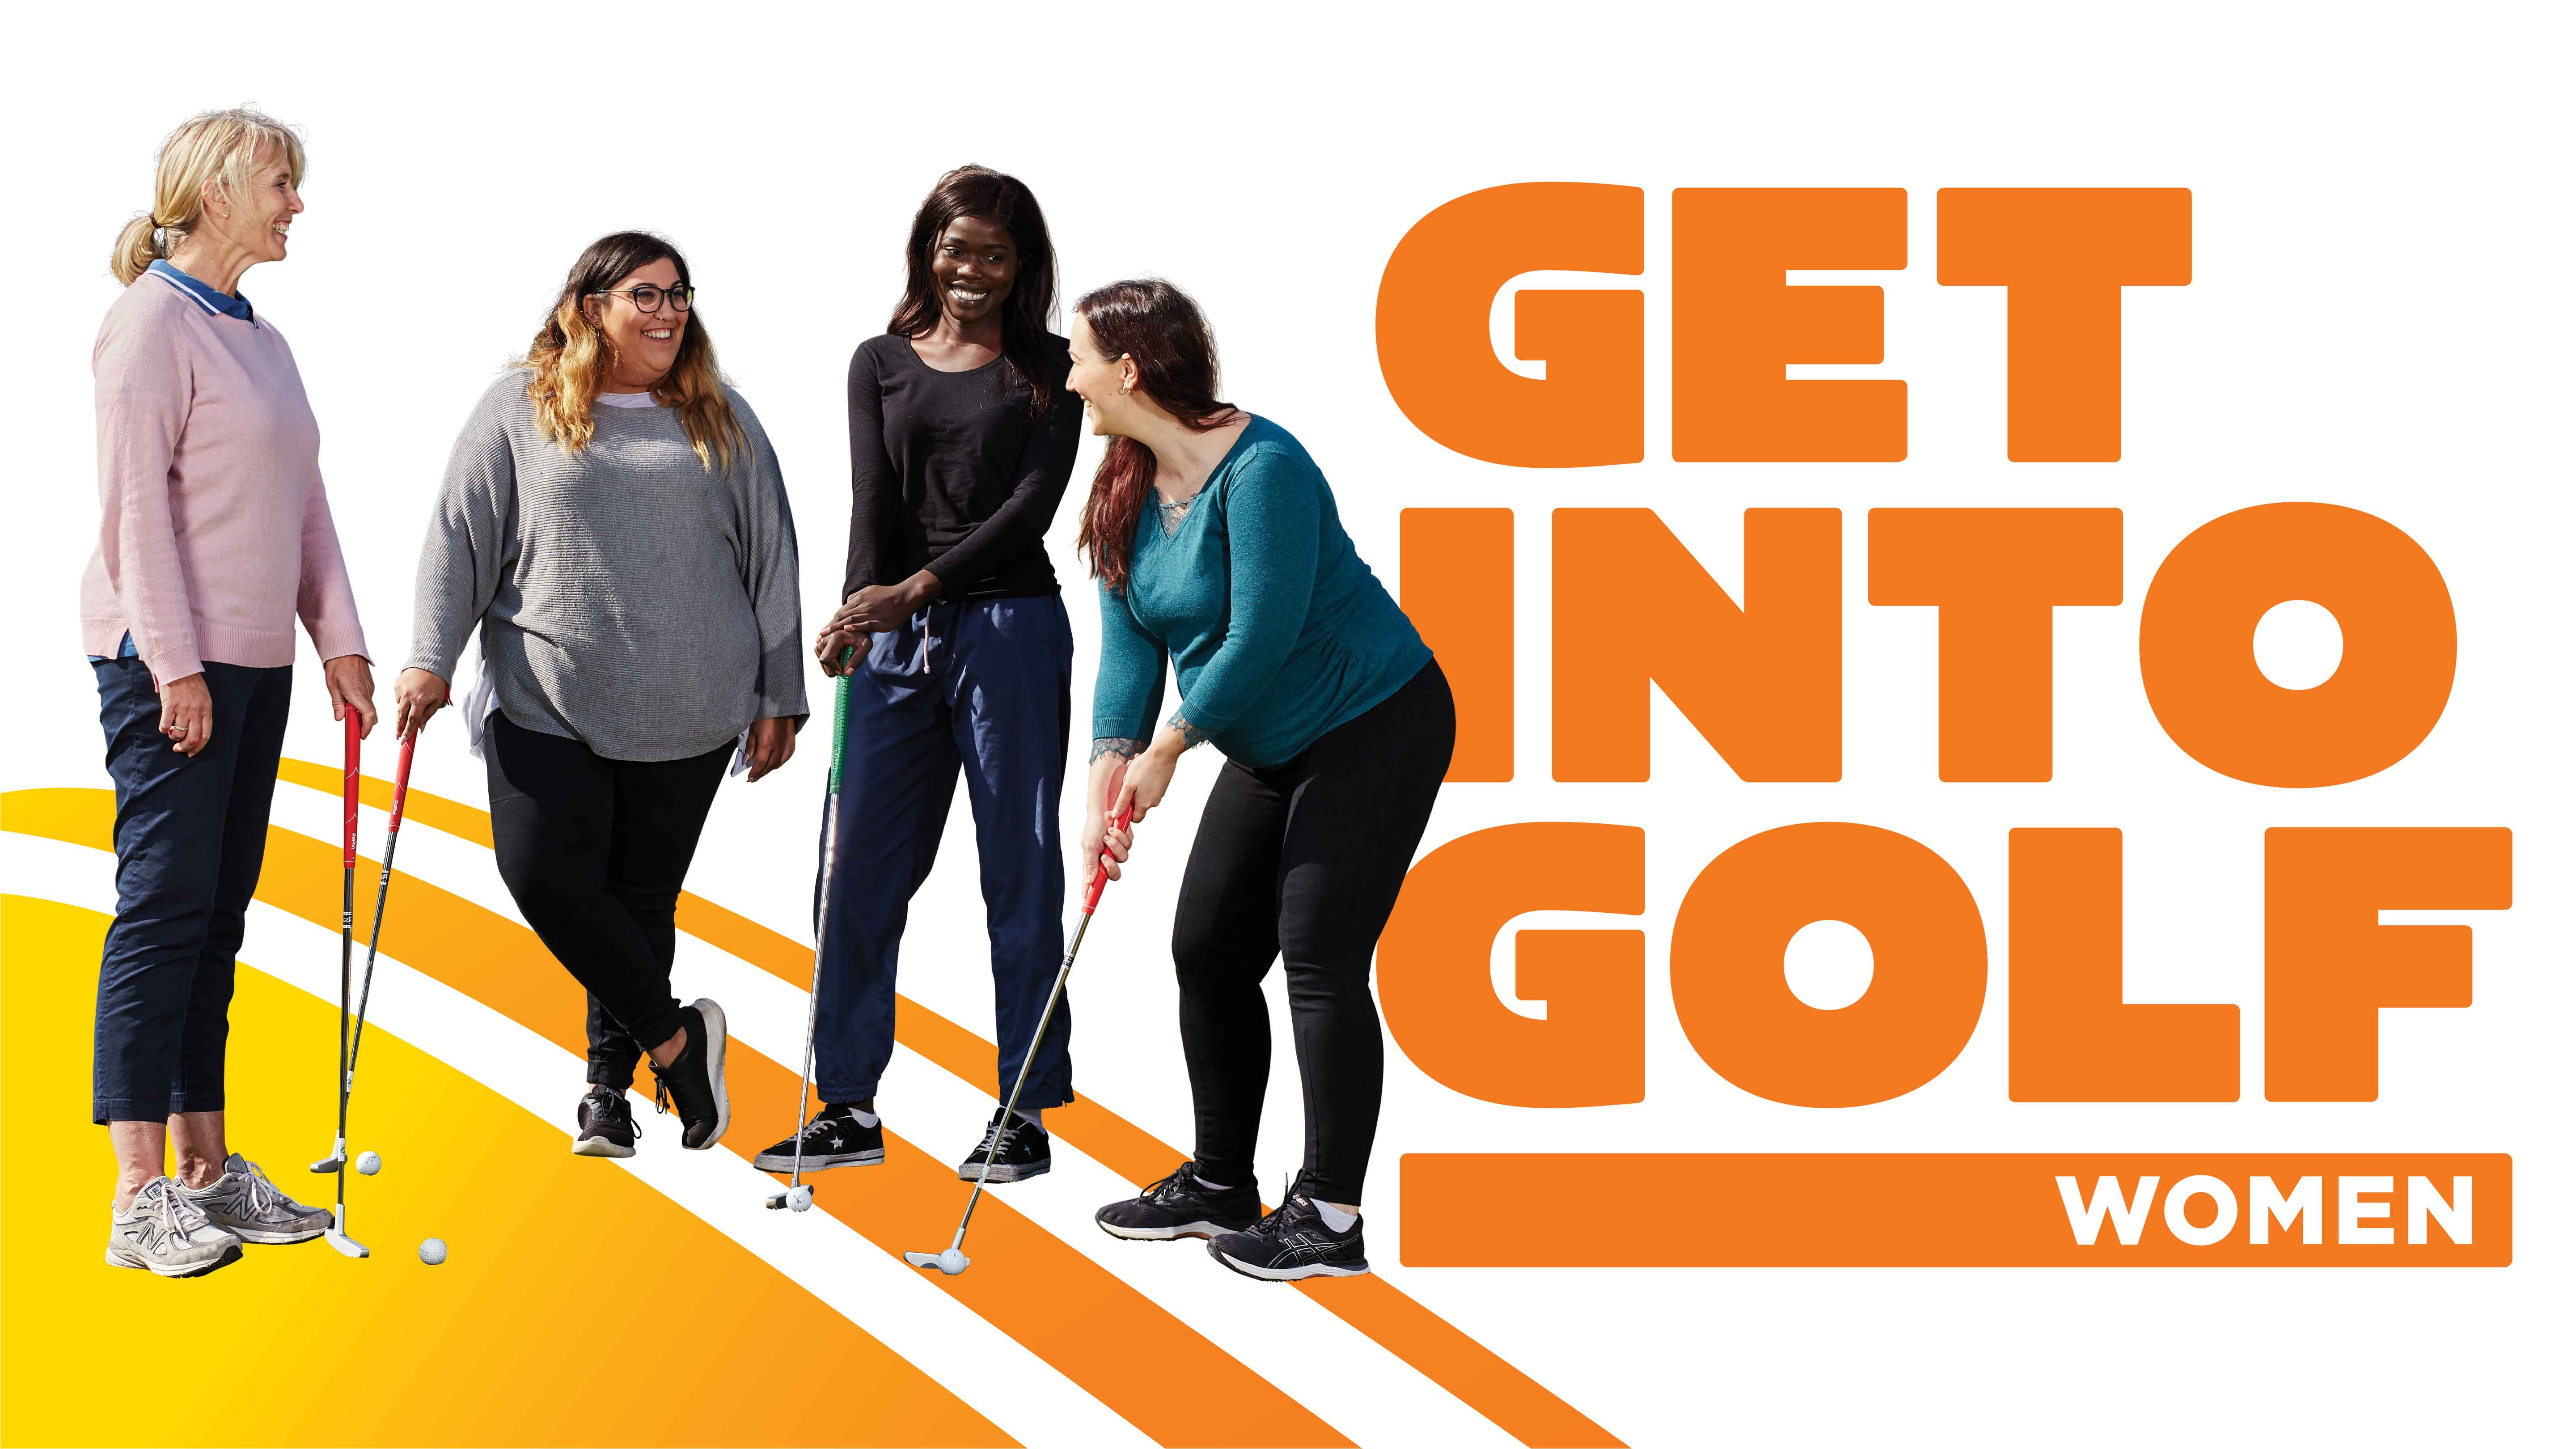 Get Into Golf Women ad